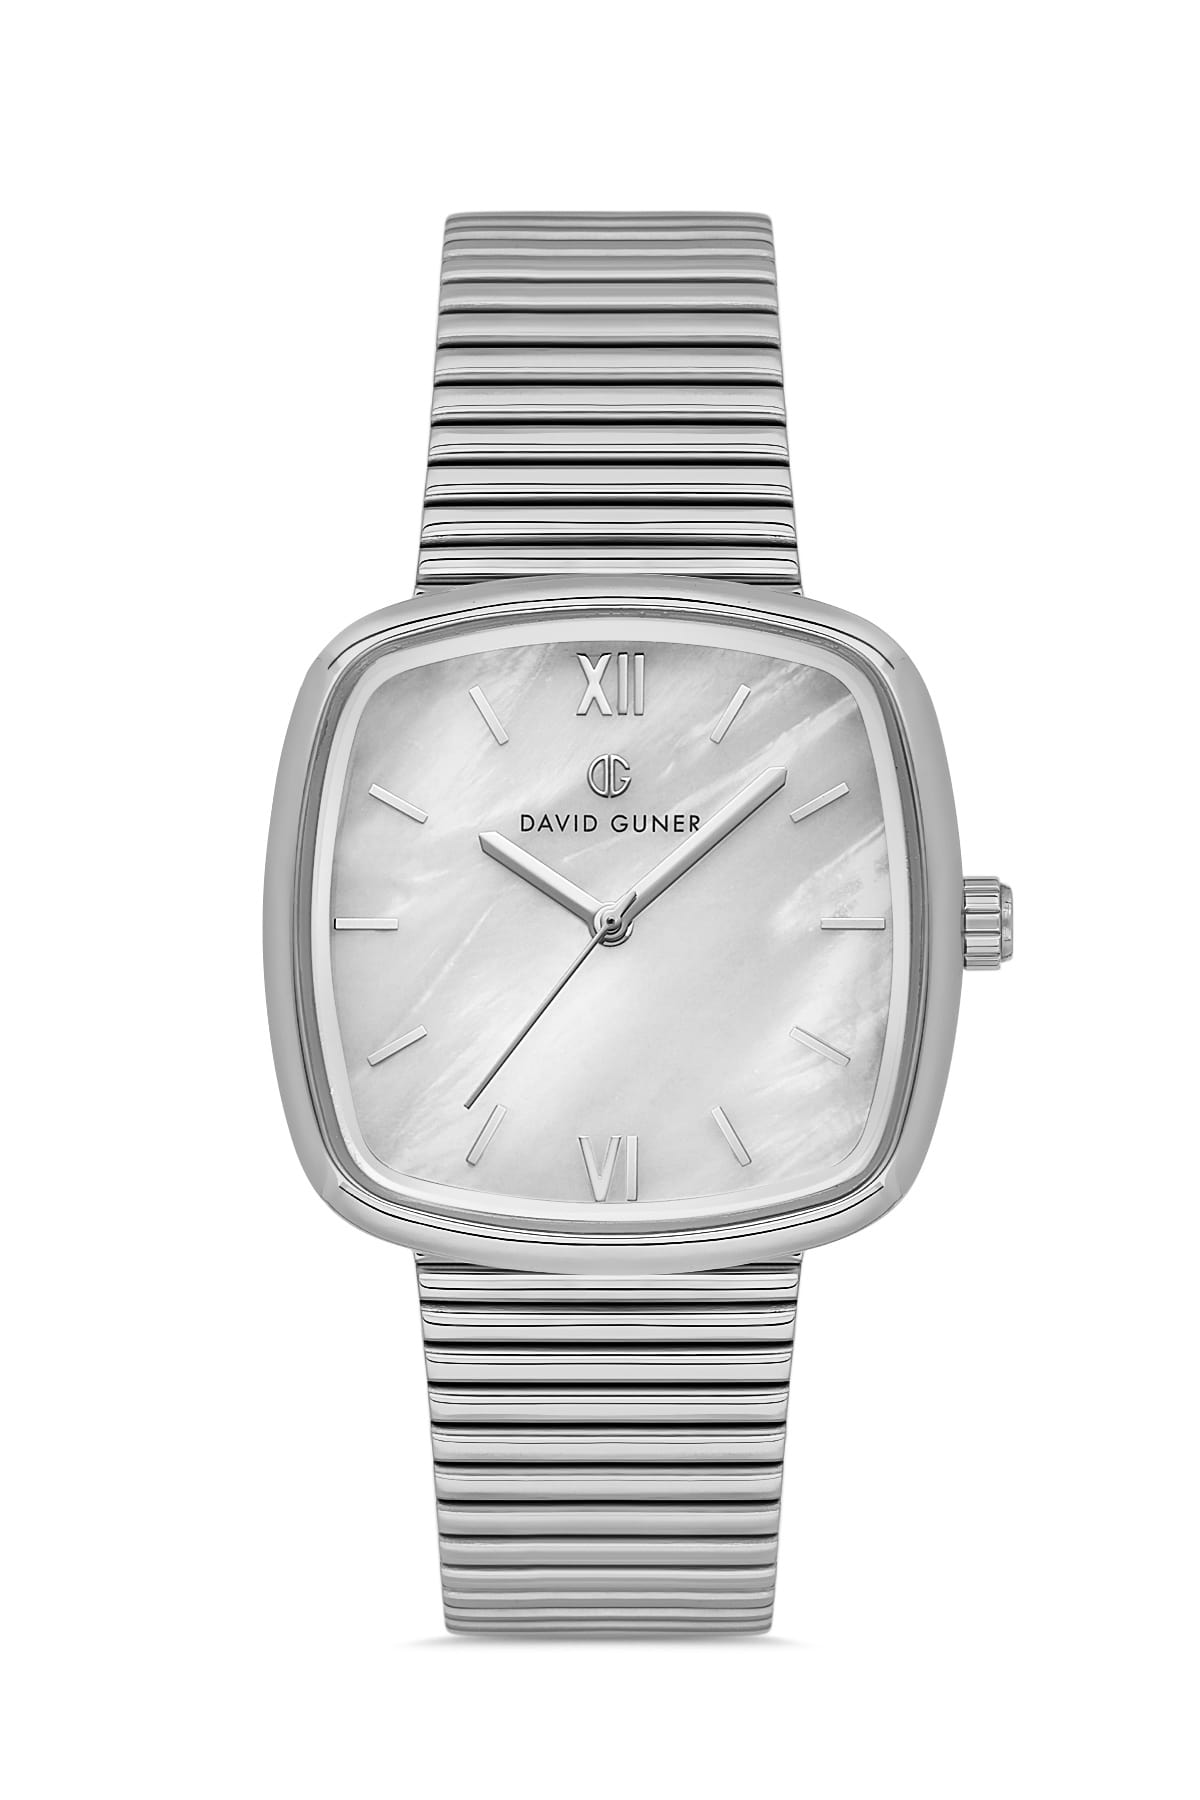 David Guner Silver Plated Silver Dial Women's Wristwatch